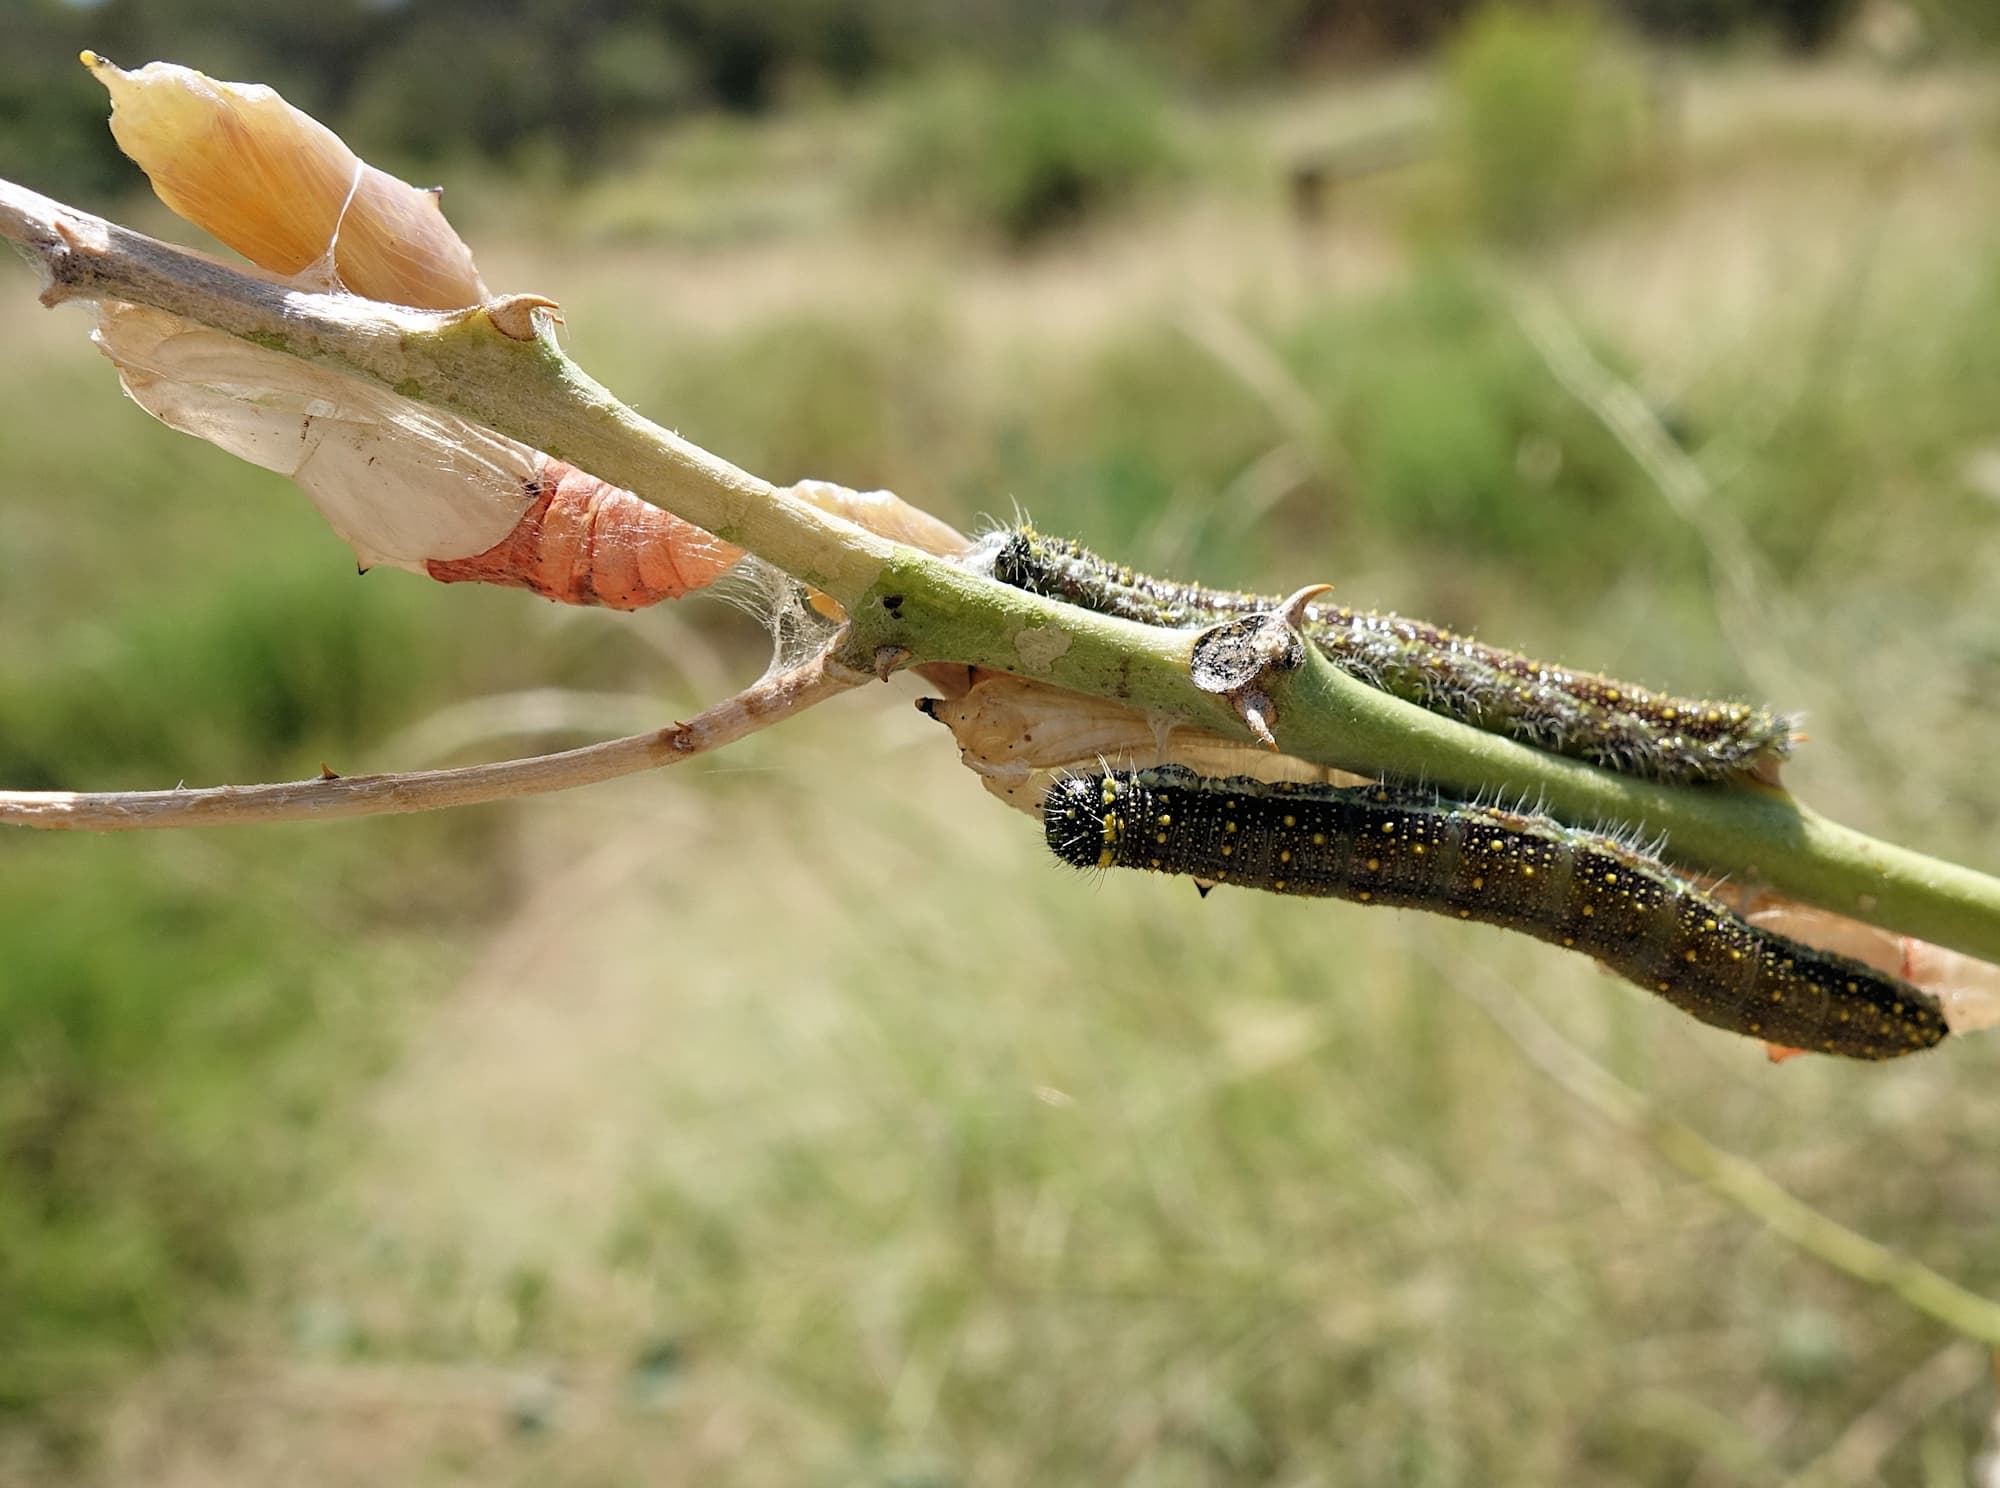 Belenois java teutonia caterpillars and instar cases